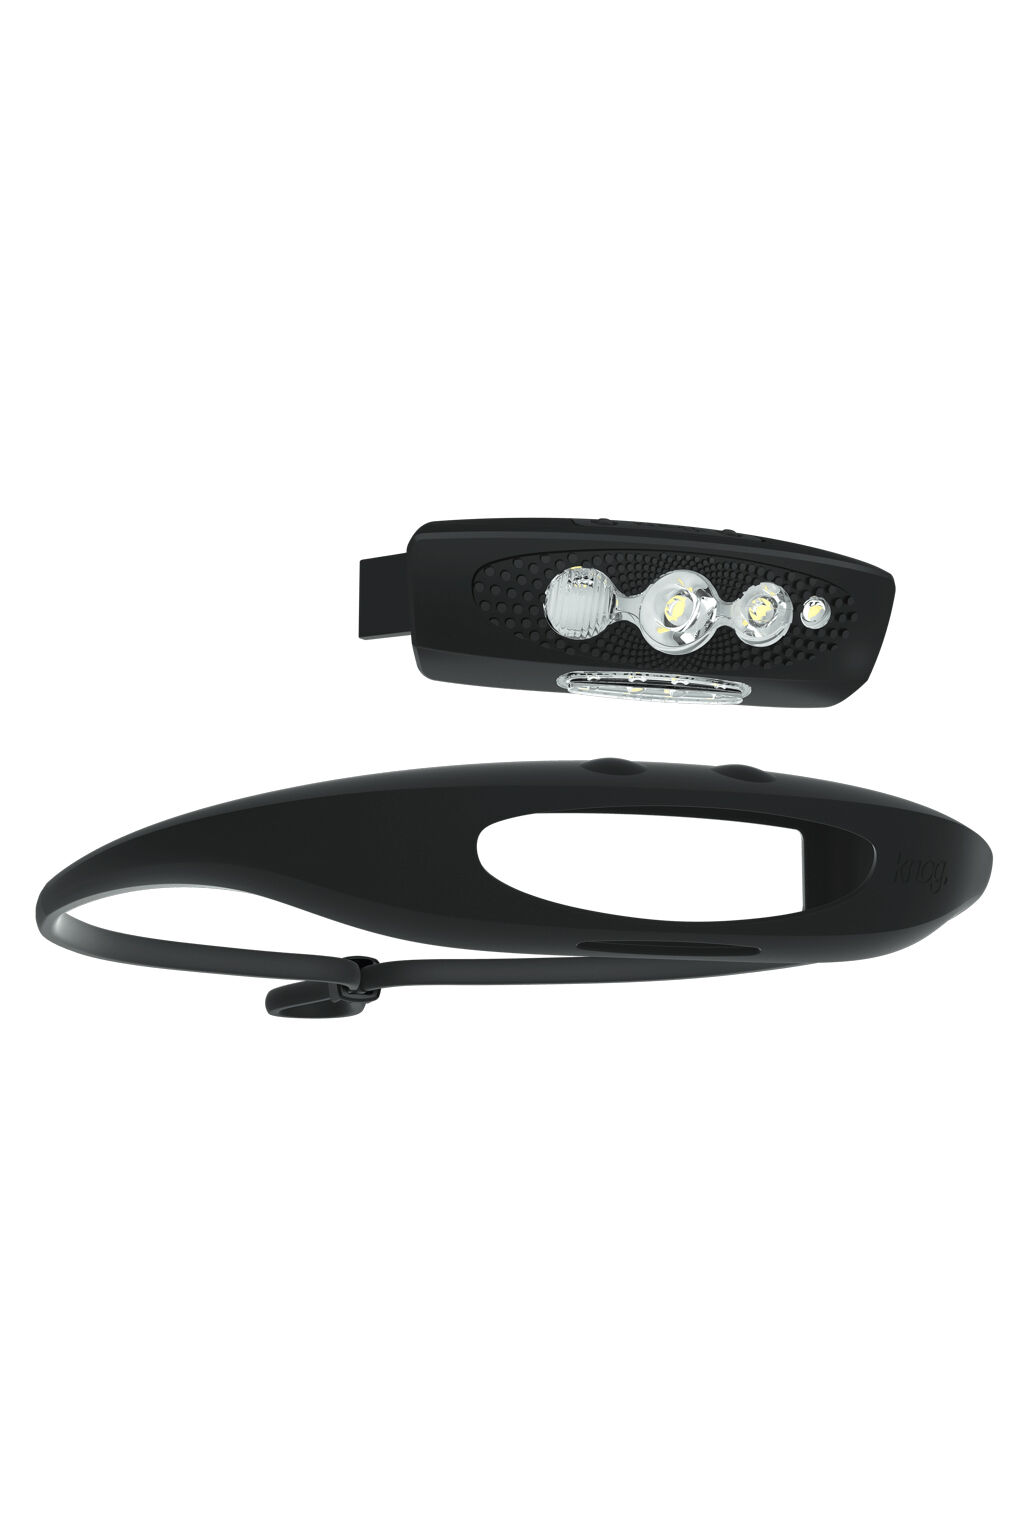 Knog Bilby Rechargeable Headlamp — 400 Lumens | Macpac